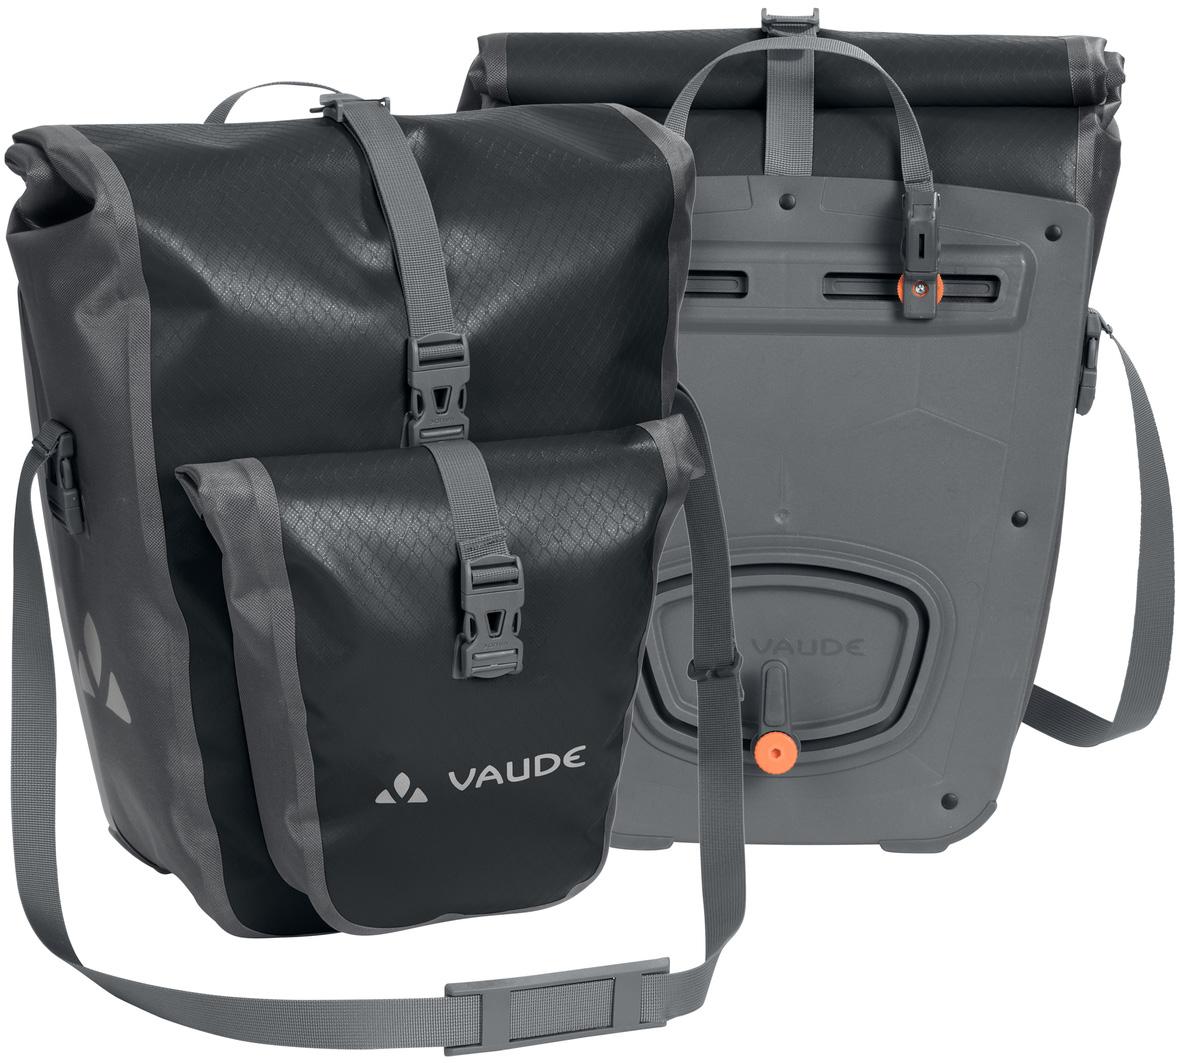 Vaude Aqua Back Plus Waterproof Rear Pannier Bags Pair - Black